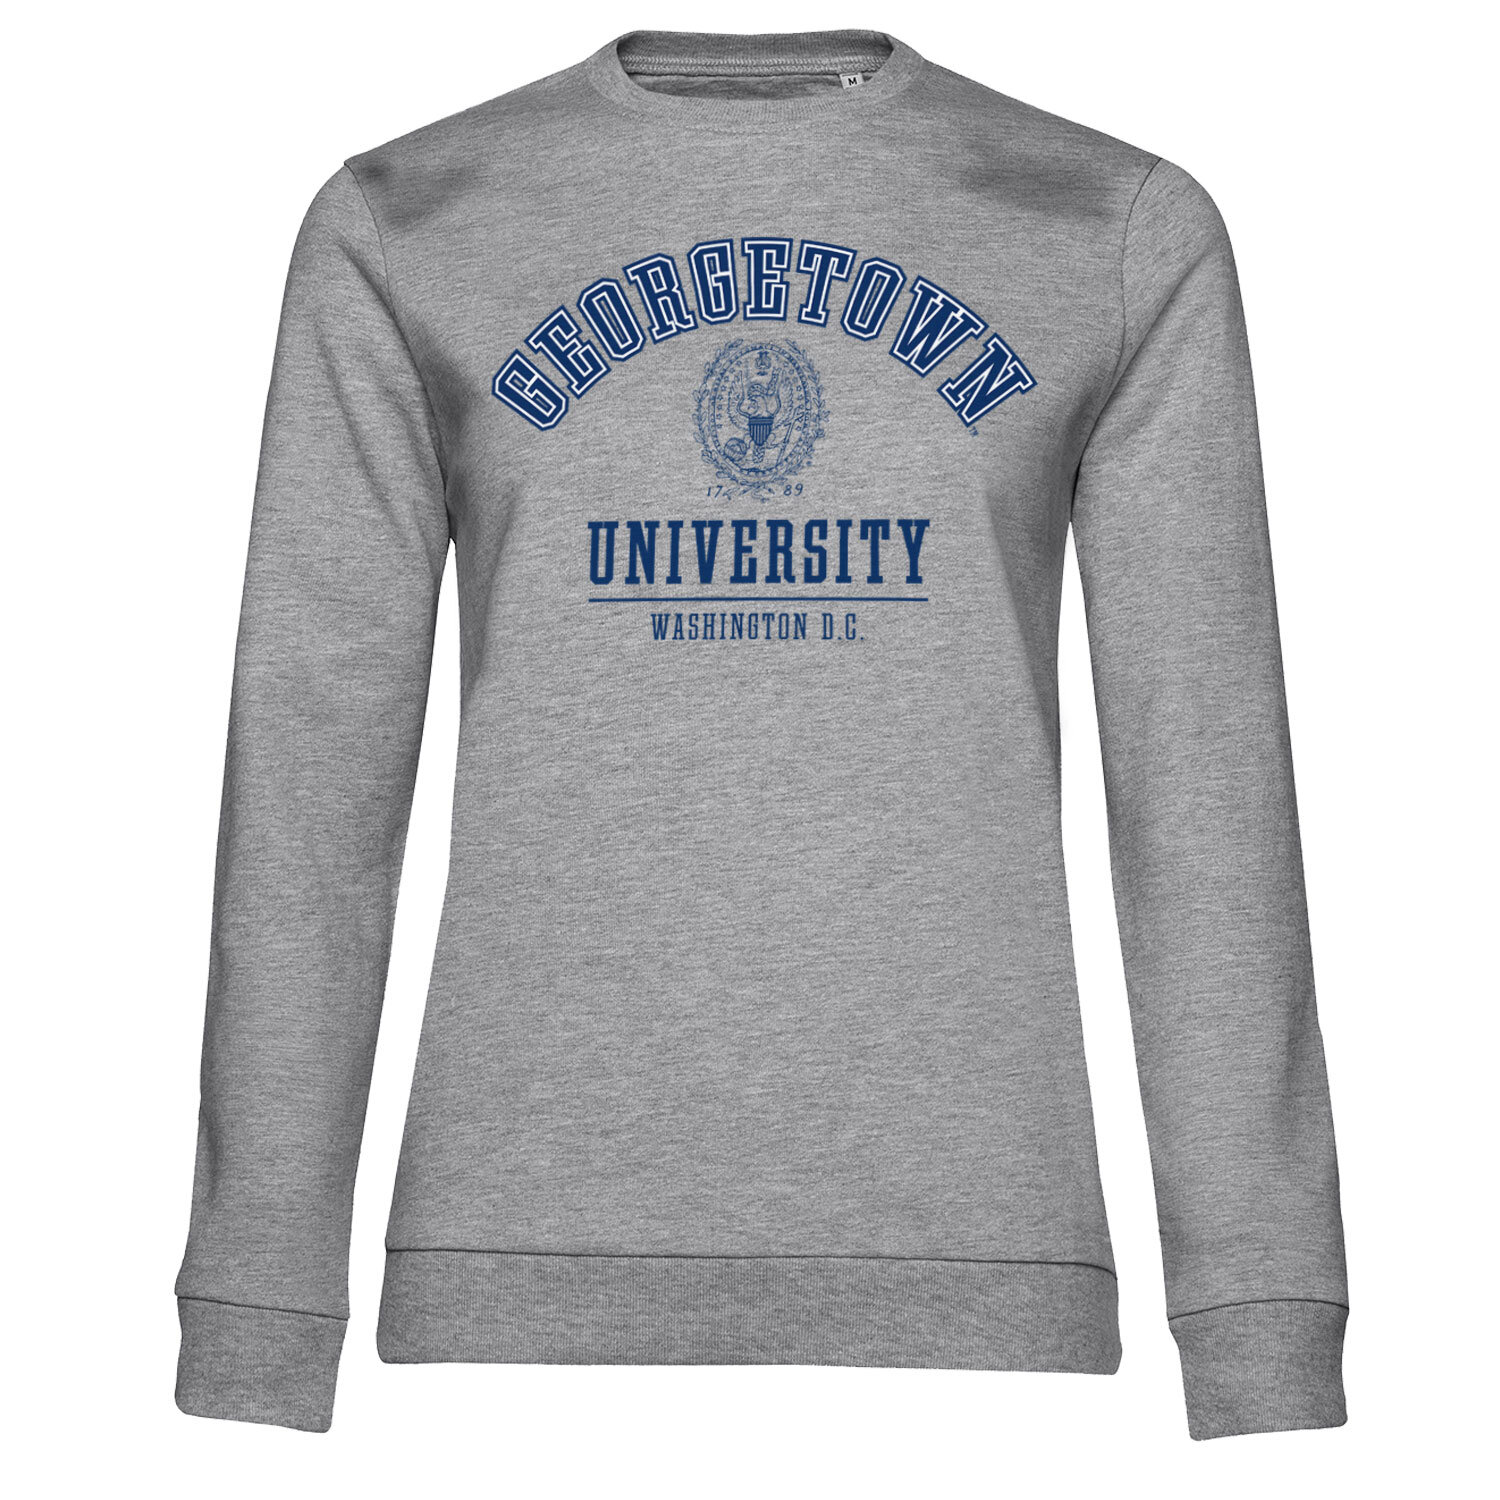 Georgetown University Girly Sweatshirt